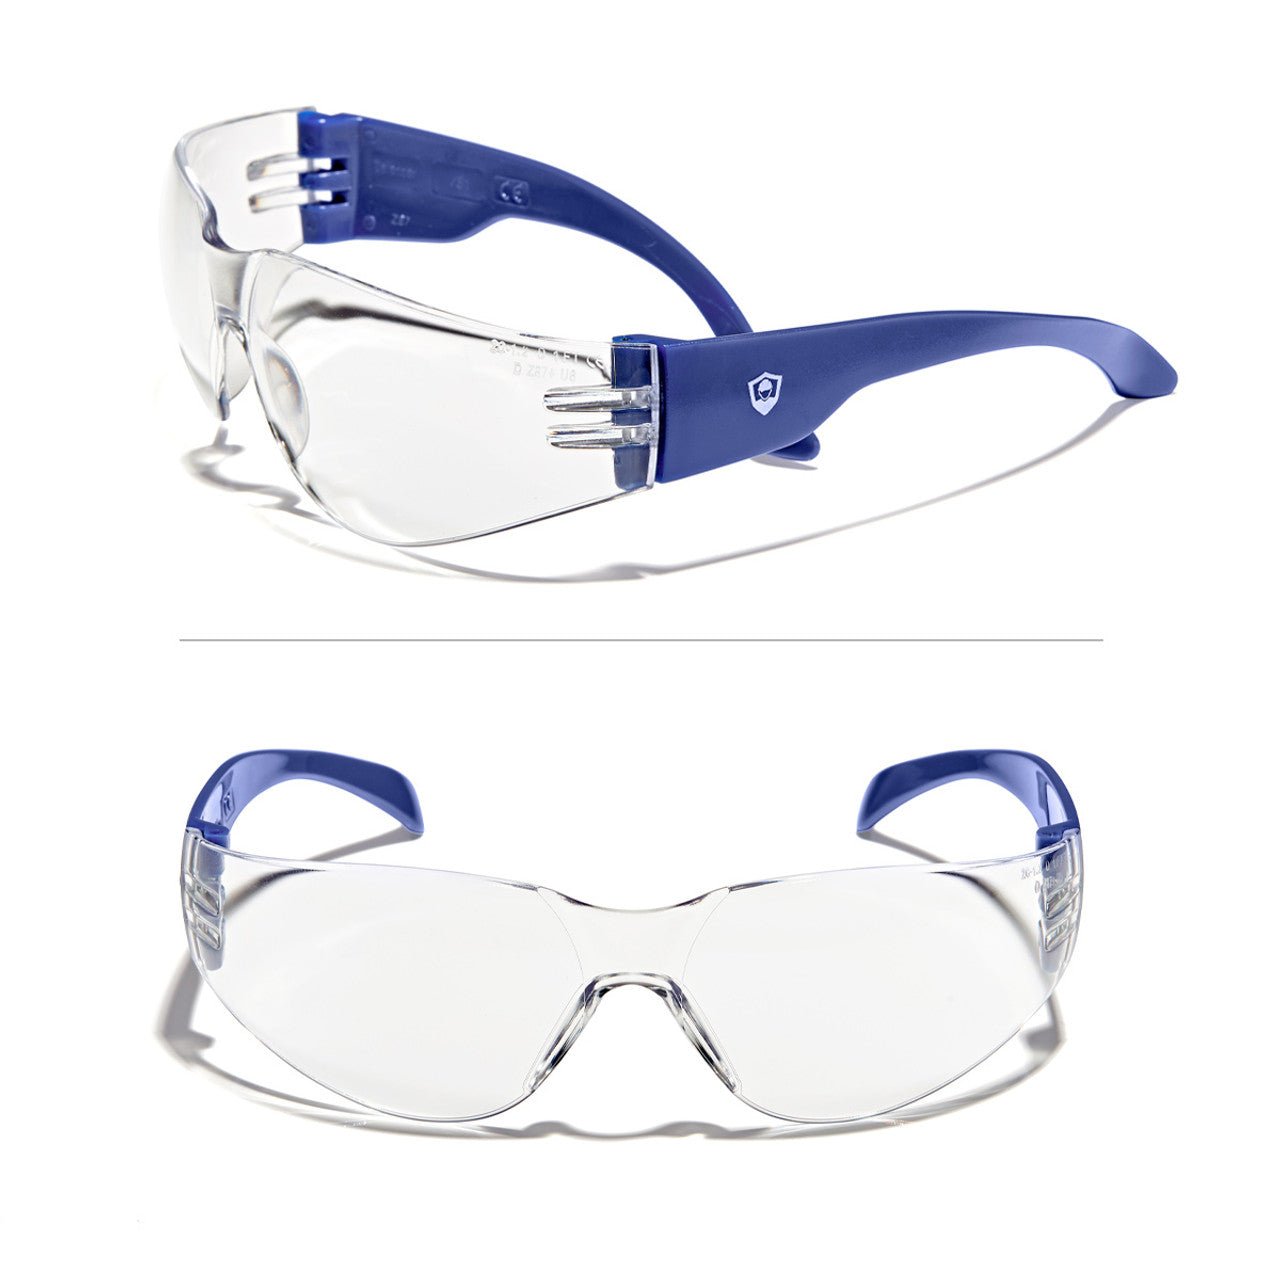 OPTIFENSE VS3 Anti Fog, Premium Smoked Safety Glasses, ANSI Z87+ (Color: Blue)